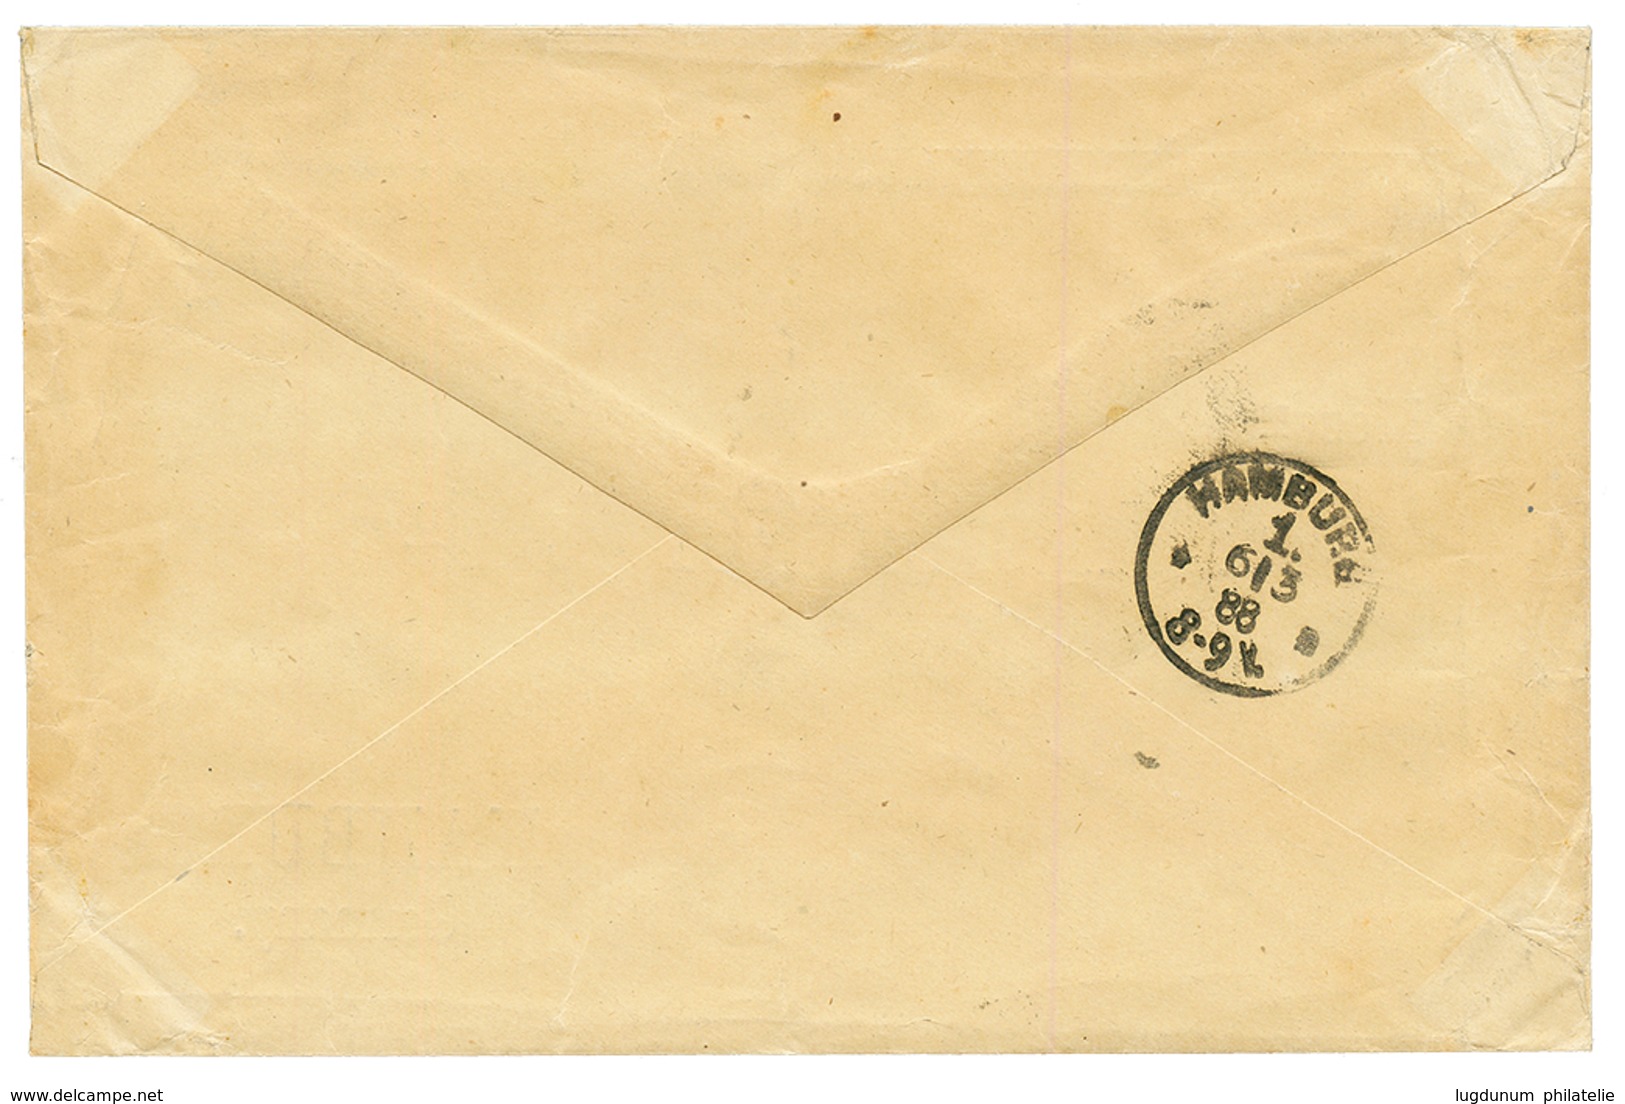 HAITI : 1888 3c + 7c+ 20c Canc. JACMEL On Envelope To GERMANY. Ex. SABATTINI. Vf. - Haïti